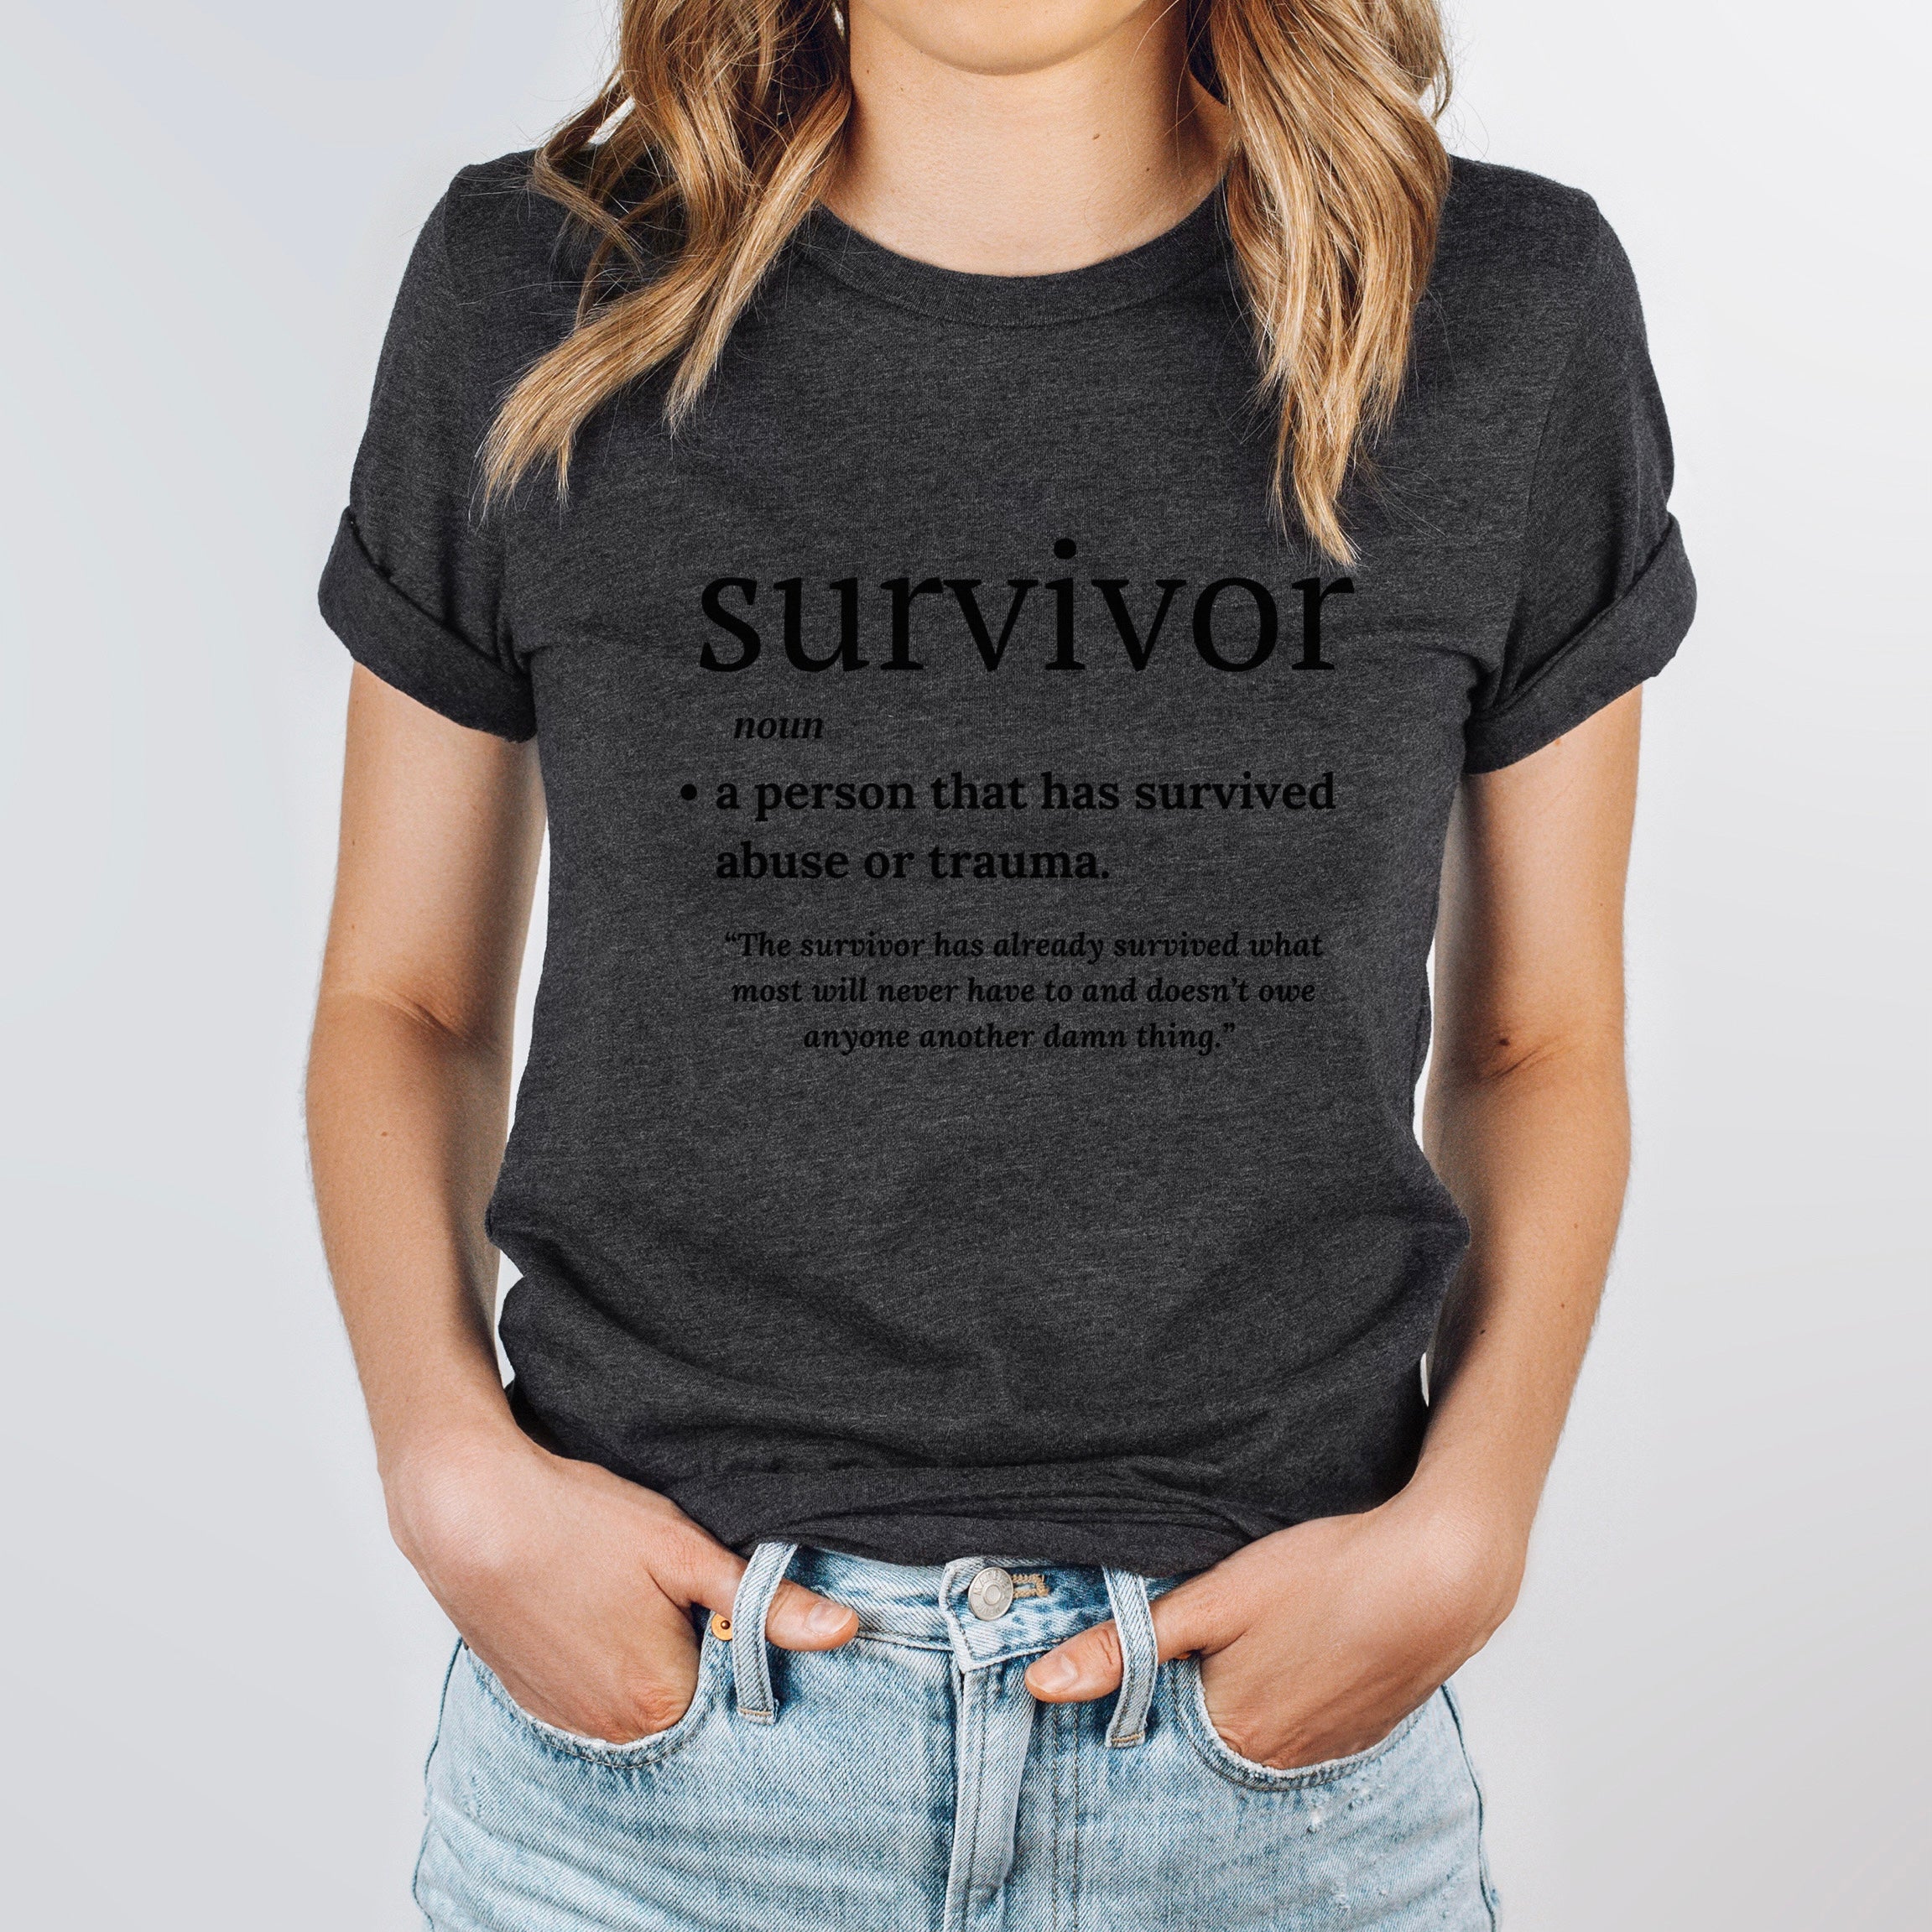 No Victim Blaming T-Shirt